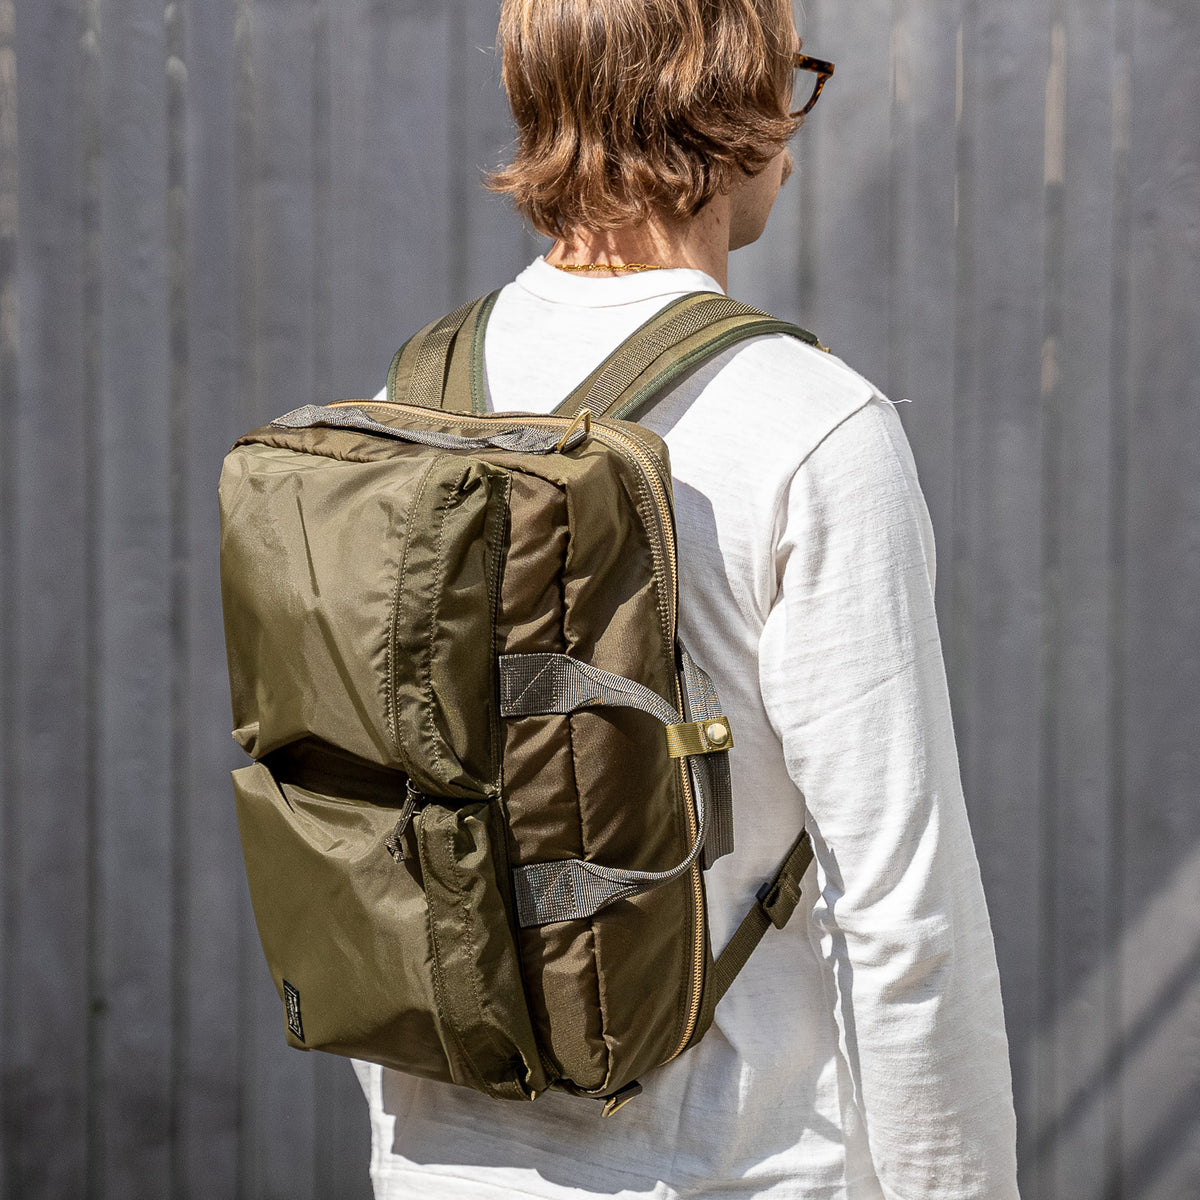 Engage Green - urban-Multifunctional-briefcase-luggage-backpak